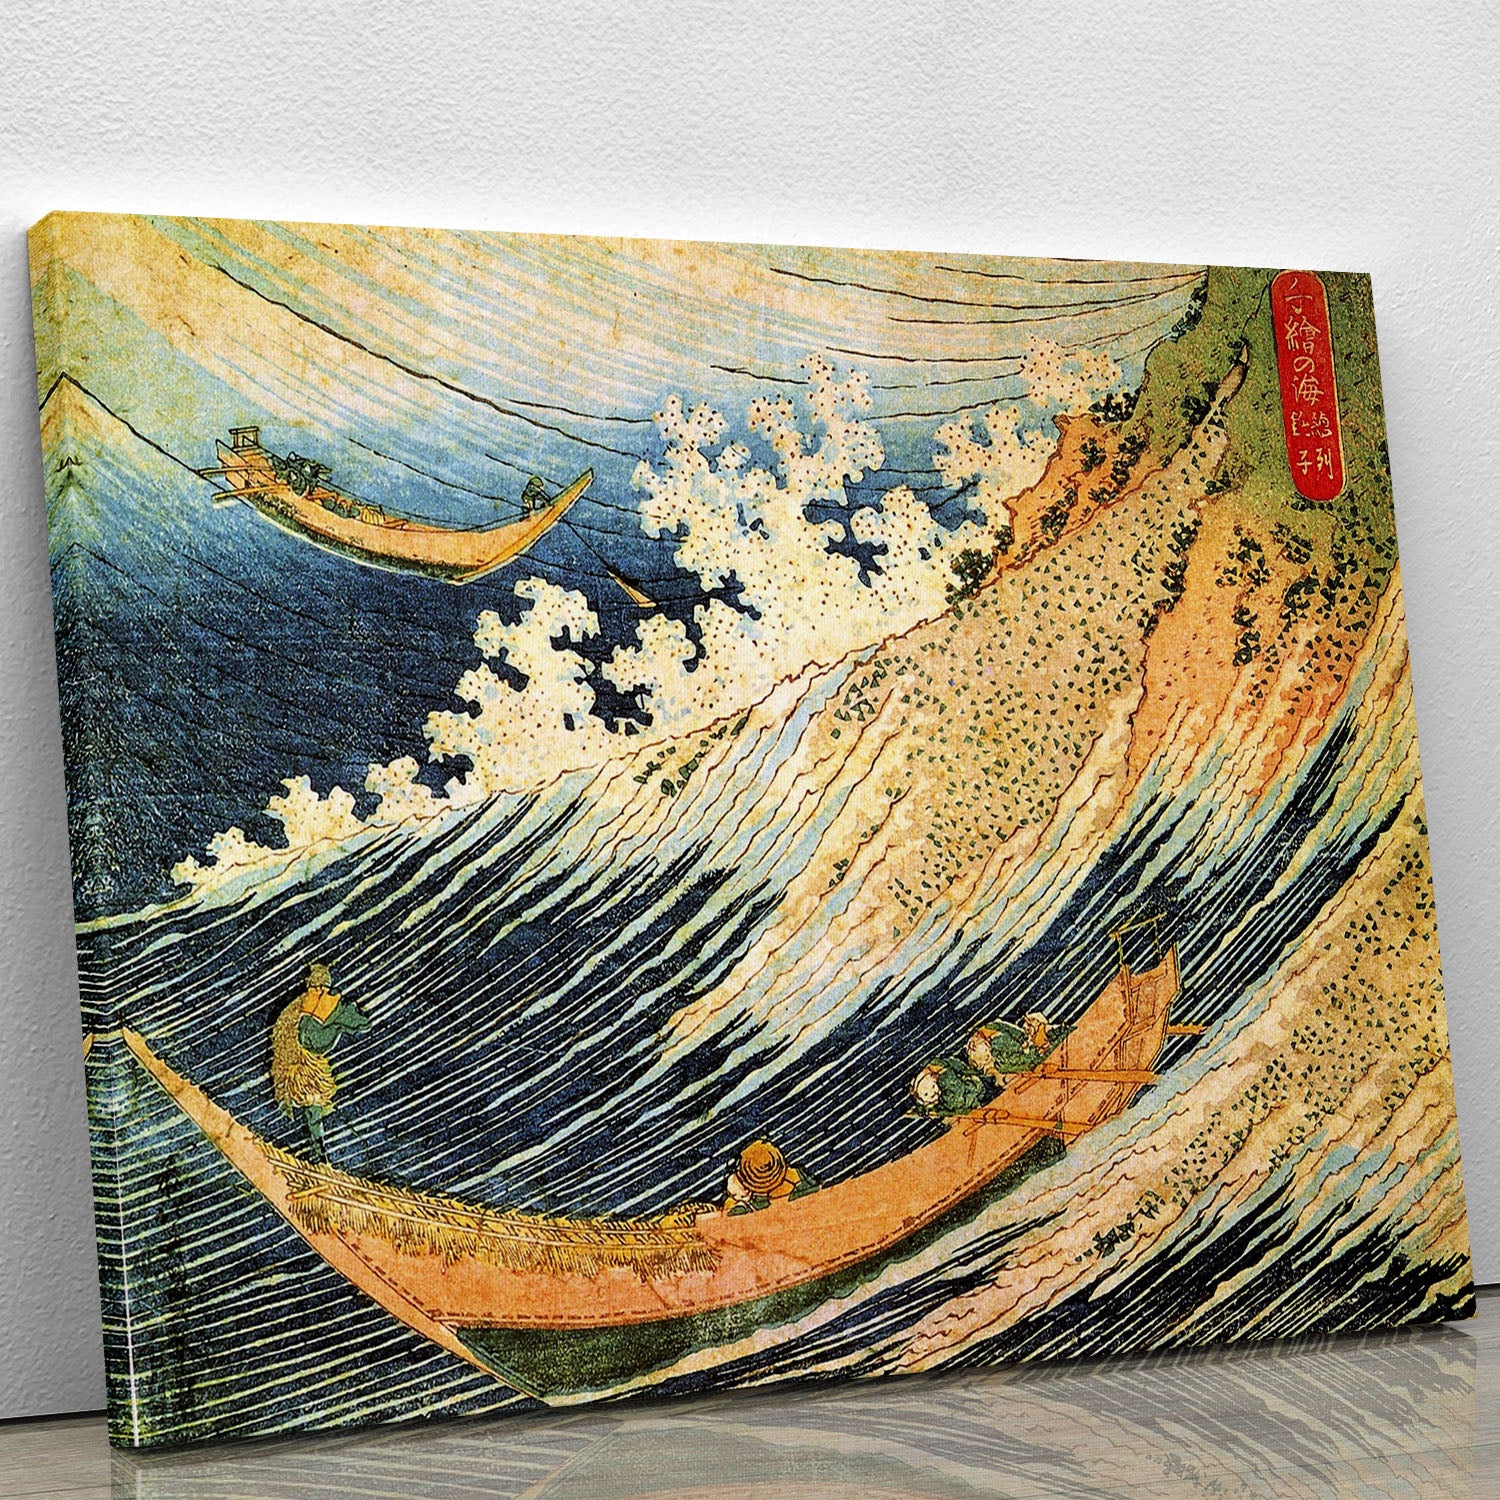 Ocean landscape 2 by Hokusai Canvas Print or Poster - Canvas Art Rocks - 1